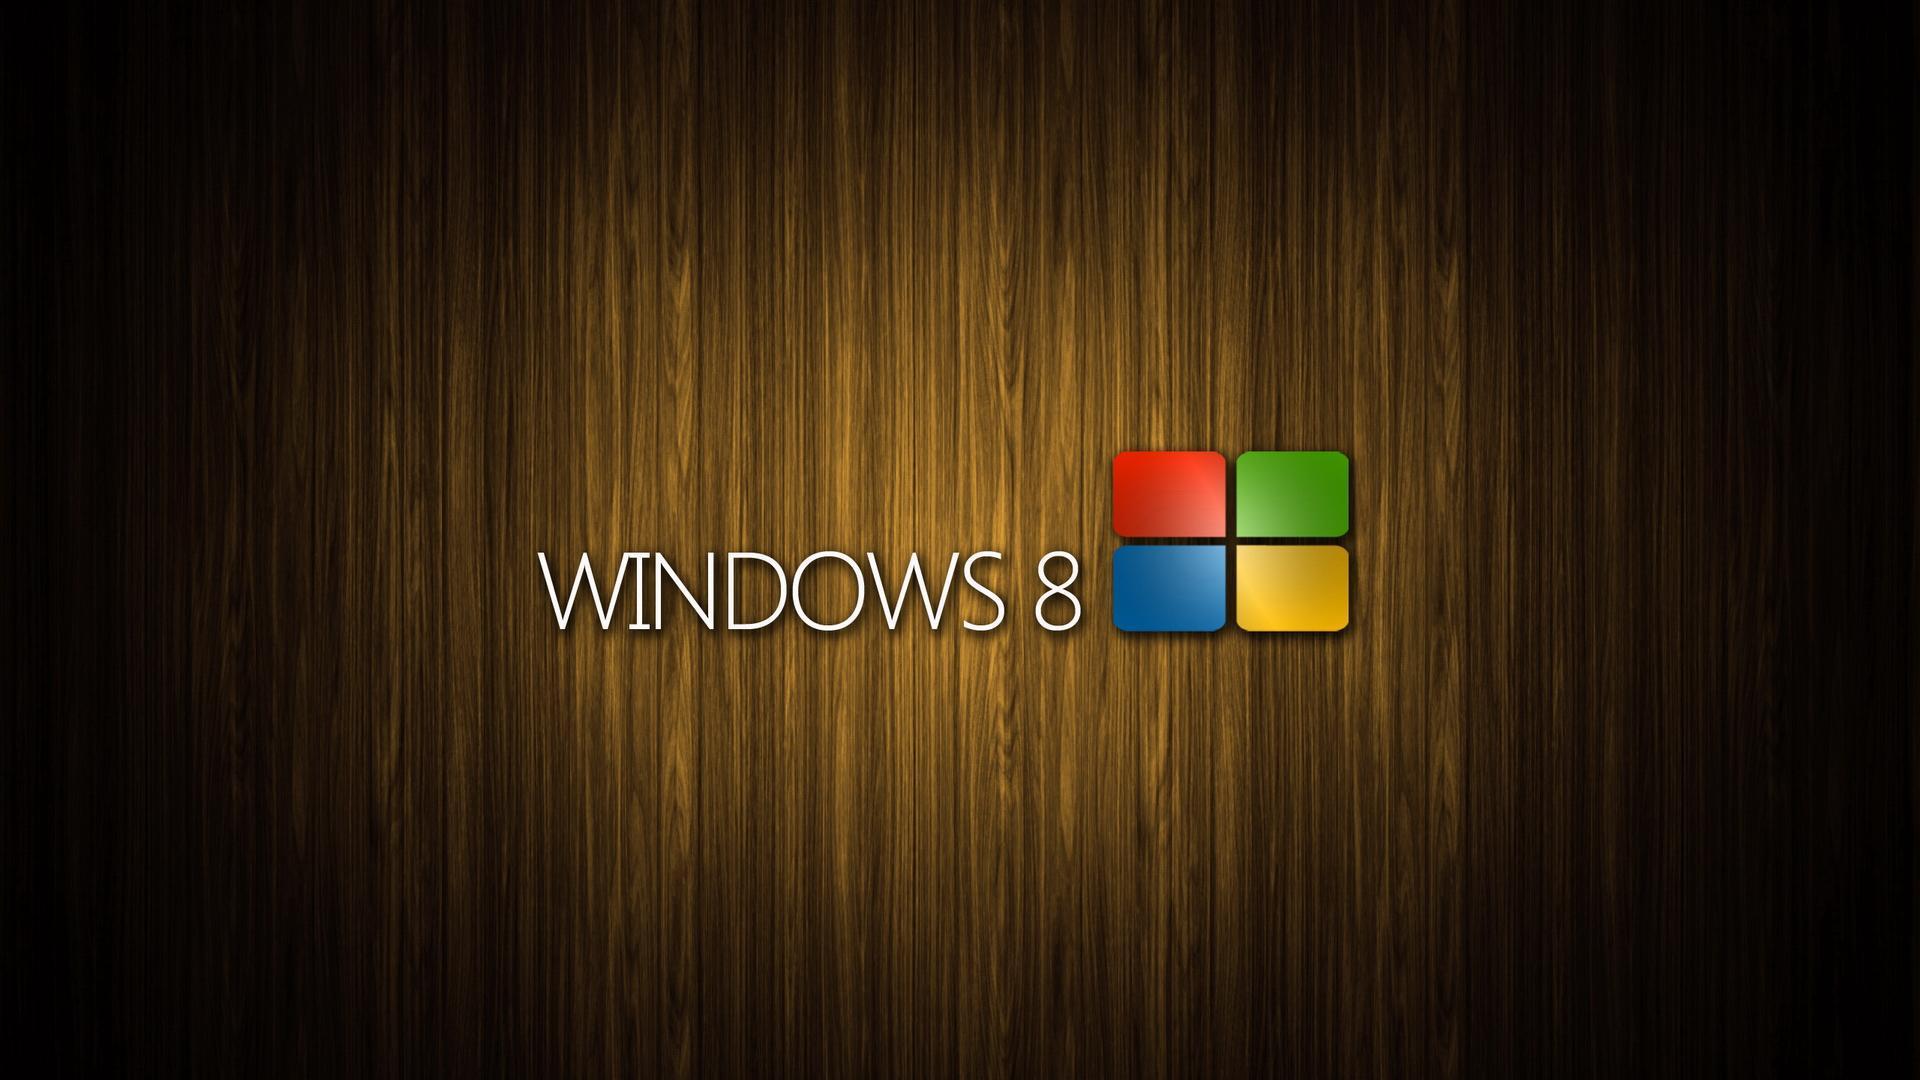 Hd Wallpapers Windows 8 1920X1080 Hd 1080P 11 HD Wallpapers